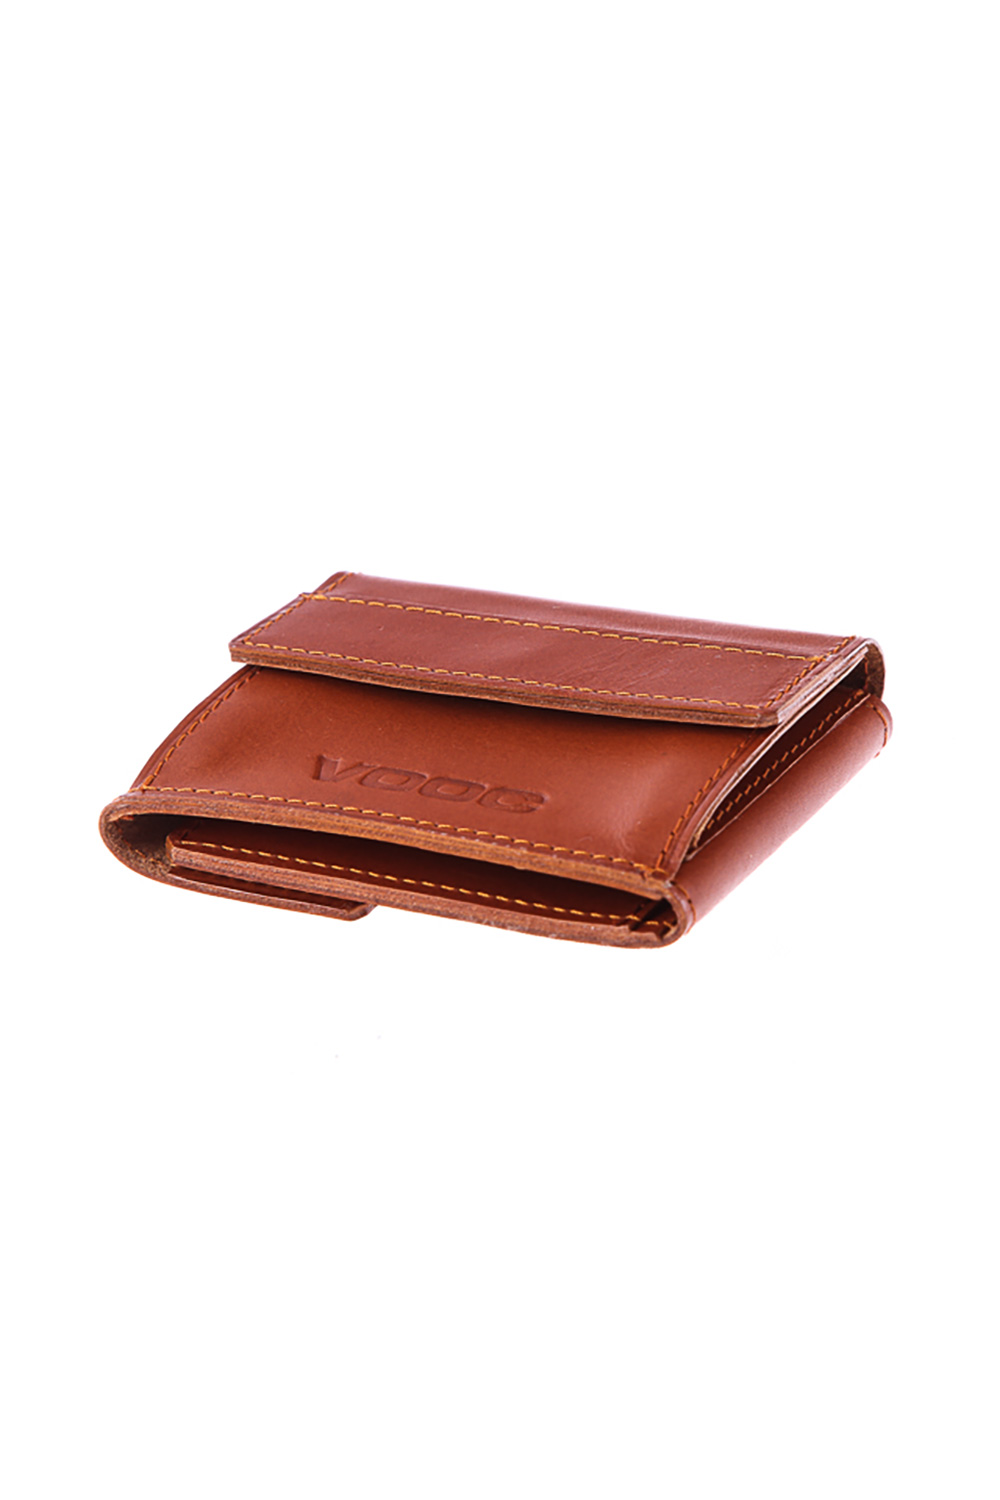 Wallet model 152146 Verosoft